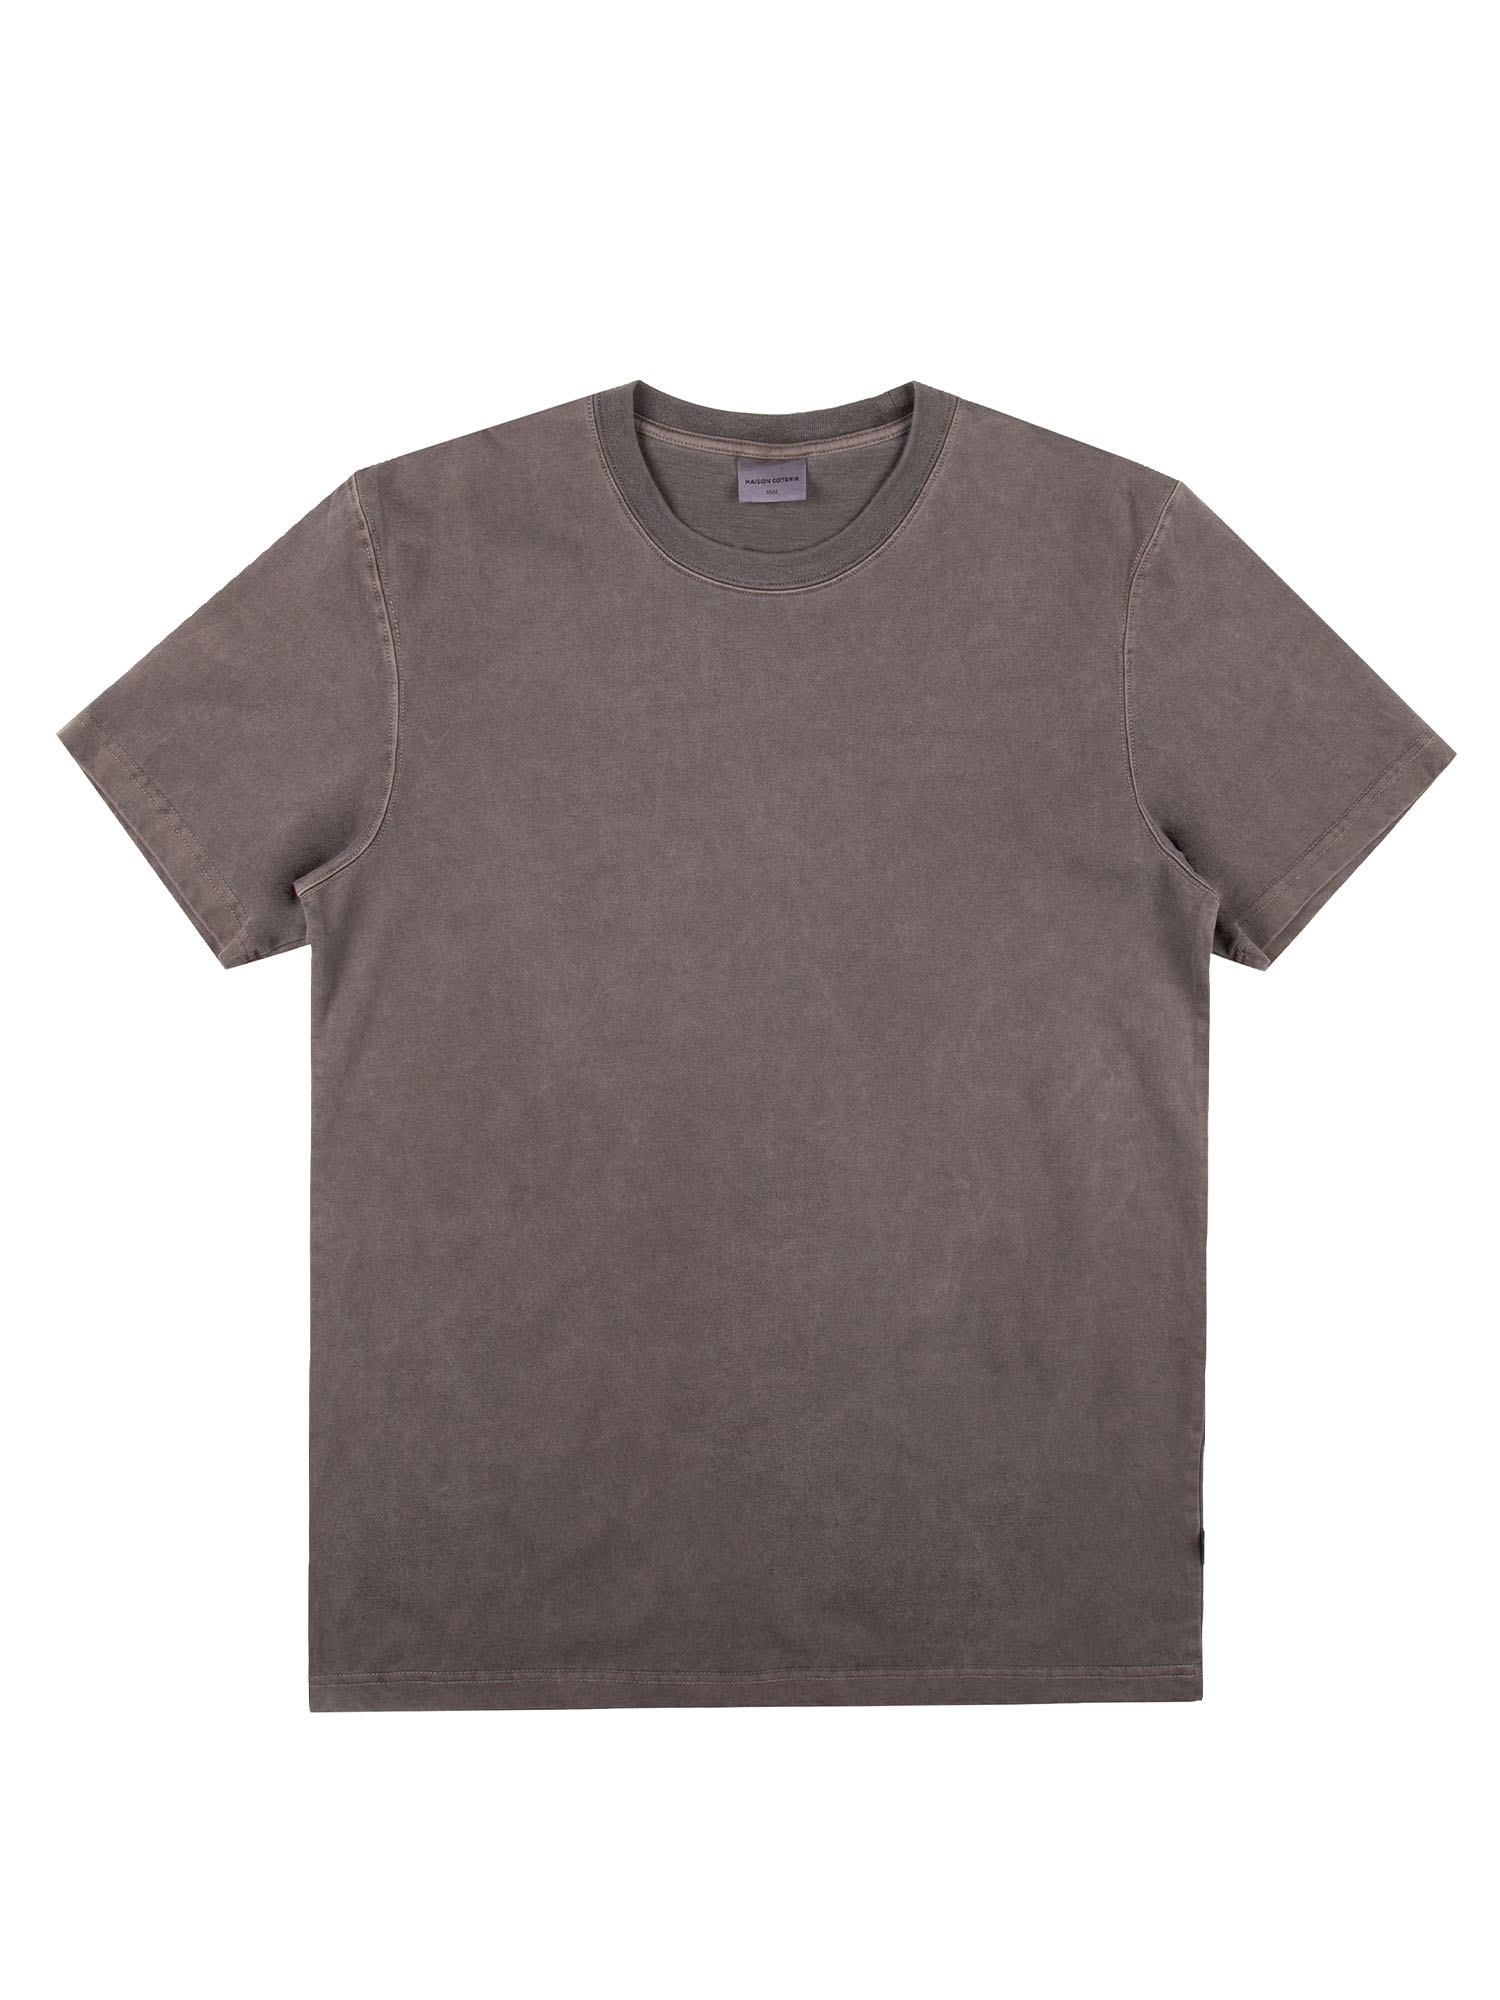 Avery - Pigment Dye T-Shirt - Brown